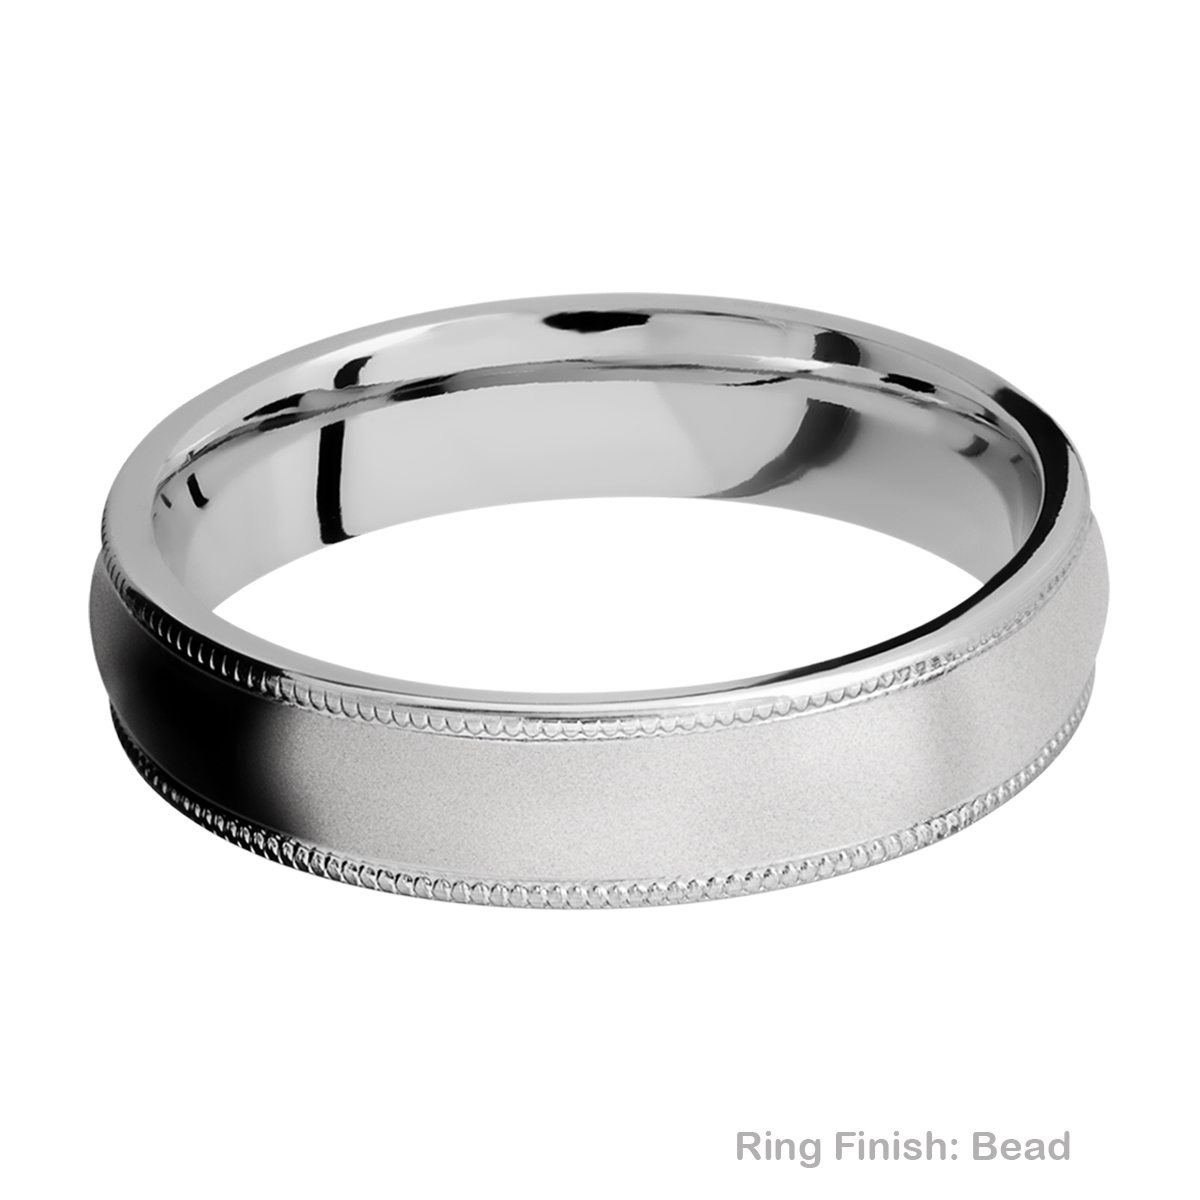 Lashbrook CC5DMIL Cobalt Chrome Wedding Ring or Band